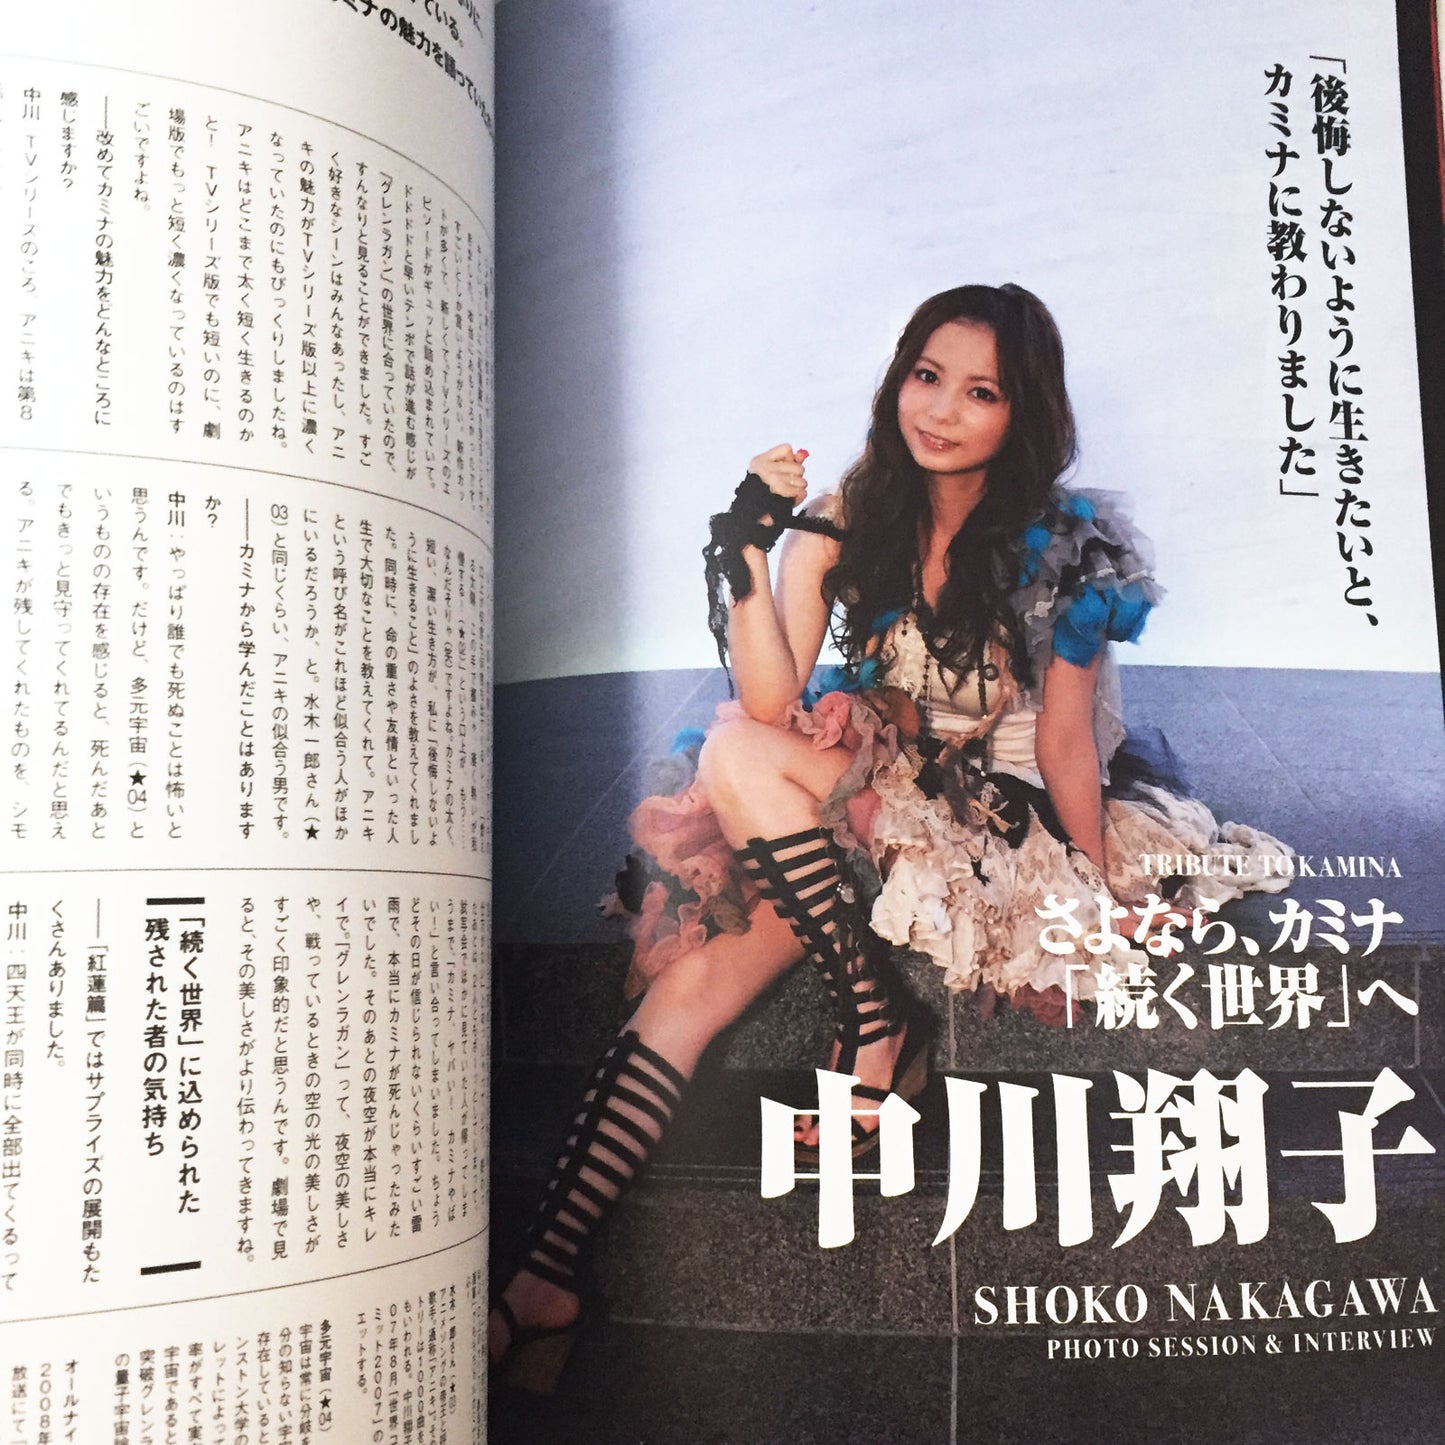 Gurren Lagann The Movie Official Fan Book – MOYASHI JAPAN BOOKS